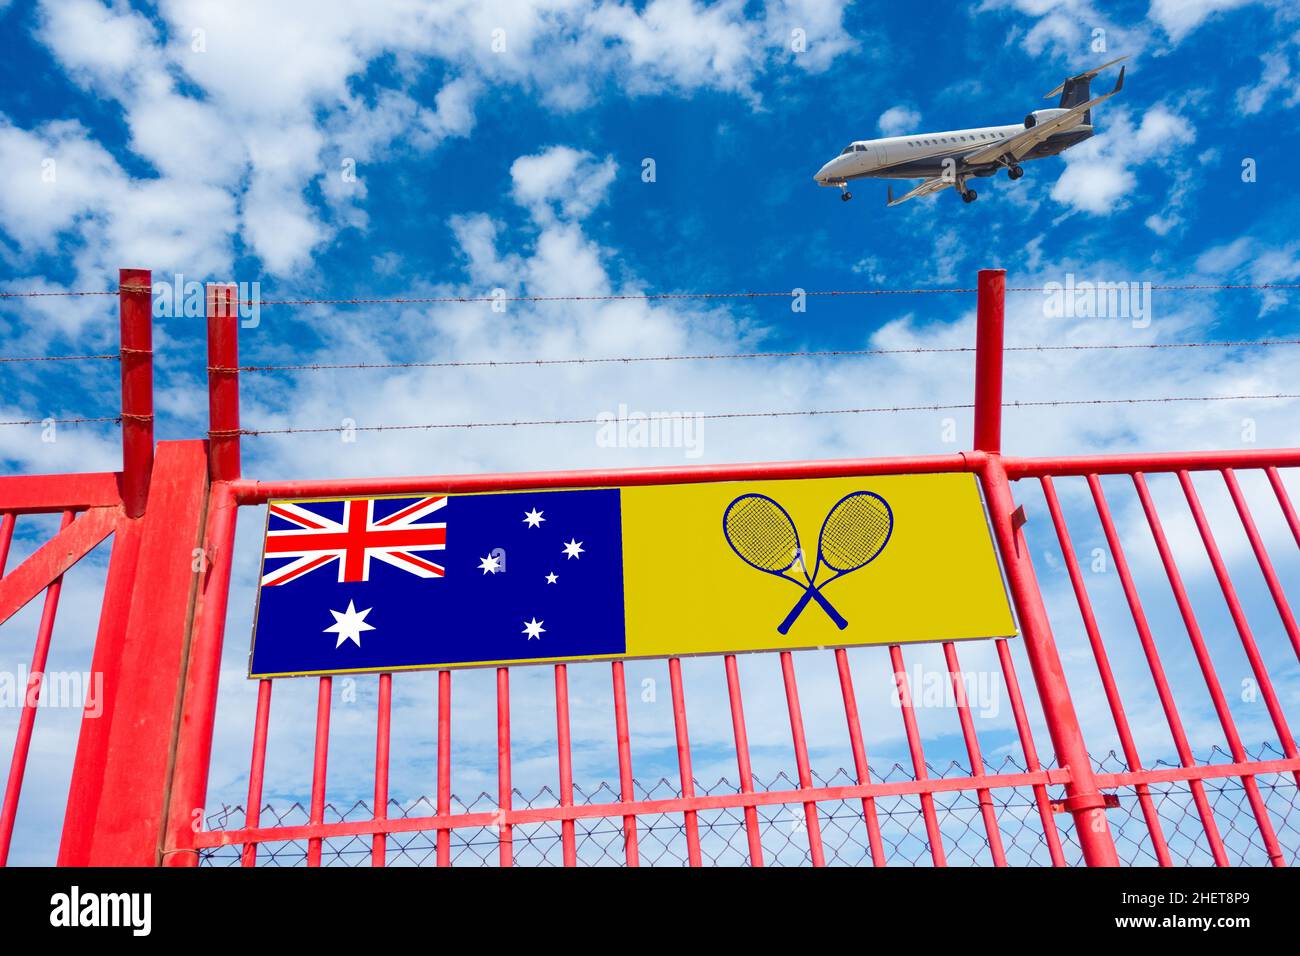 Australian flag next to crossed tennis rackets on airport fence with private jet in sky. Australia, Novak Djokovic, visa, deportation, Covid.. concept Stock Photo